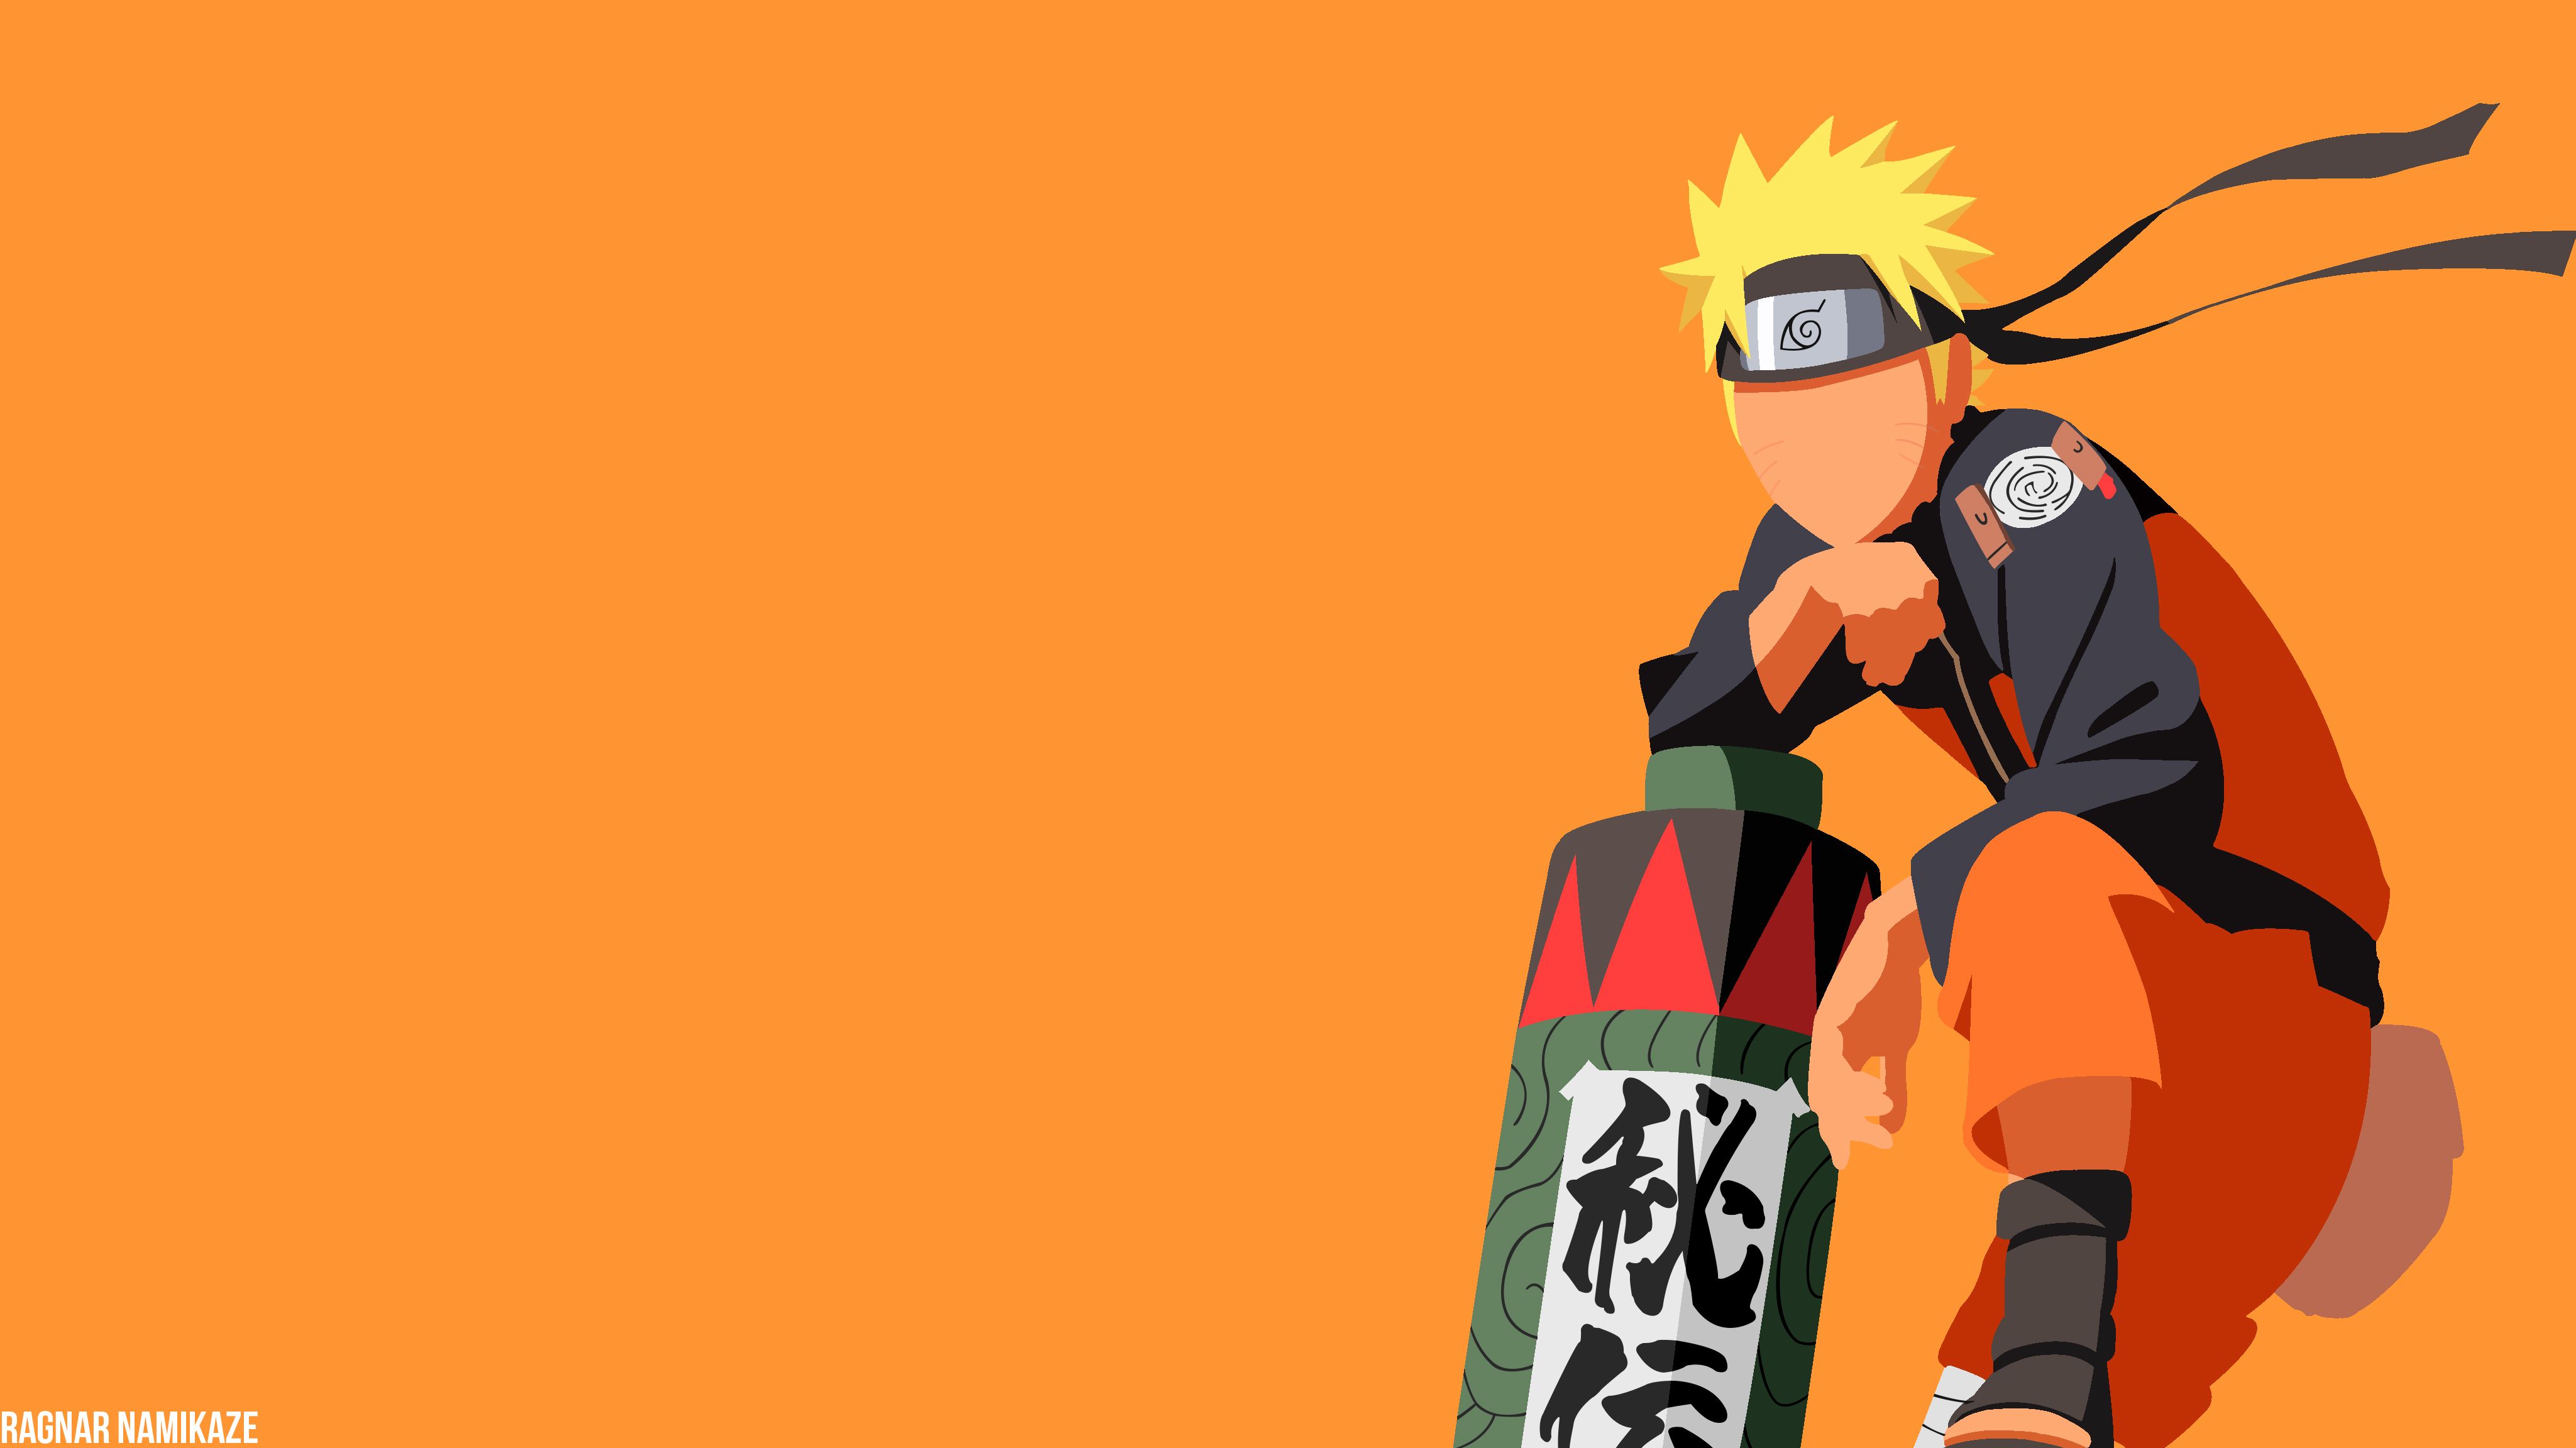 Naruto Uzumaki Minimalist Wallpaper, HD Minimalist 4K Wallpaper, Image, Photo and Background